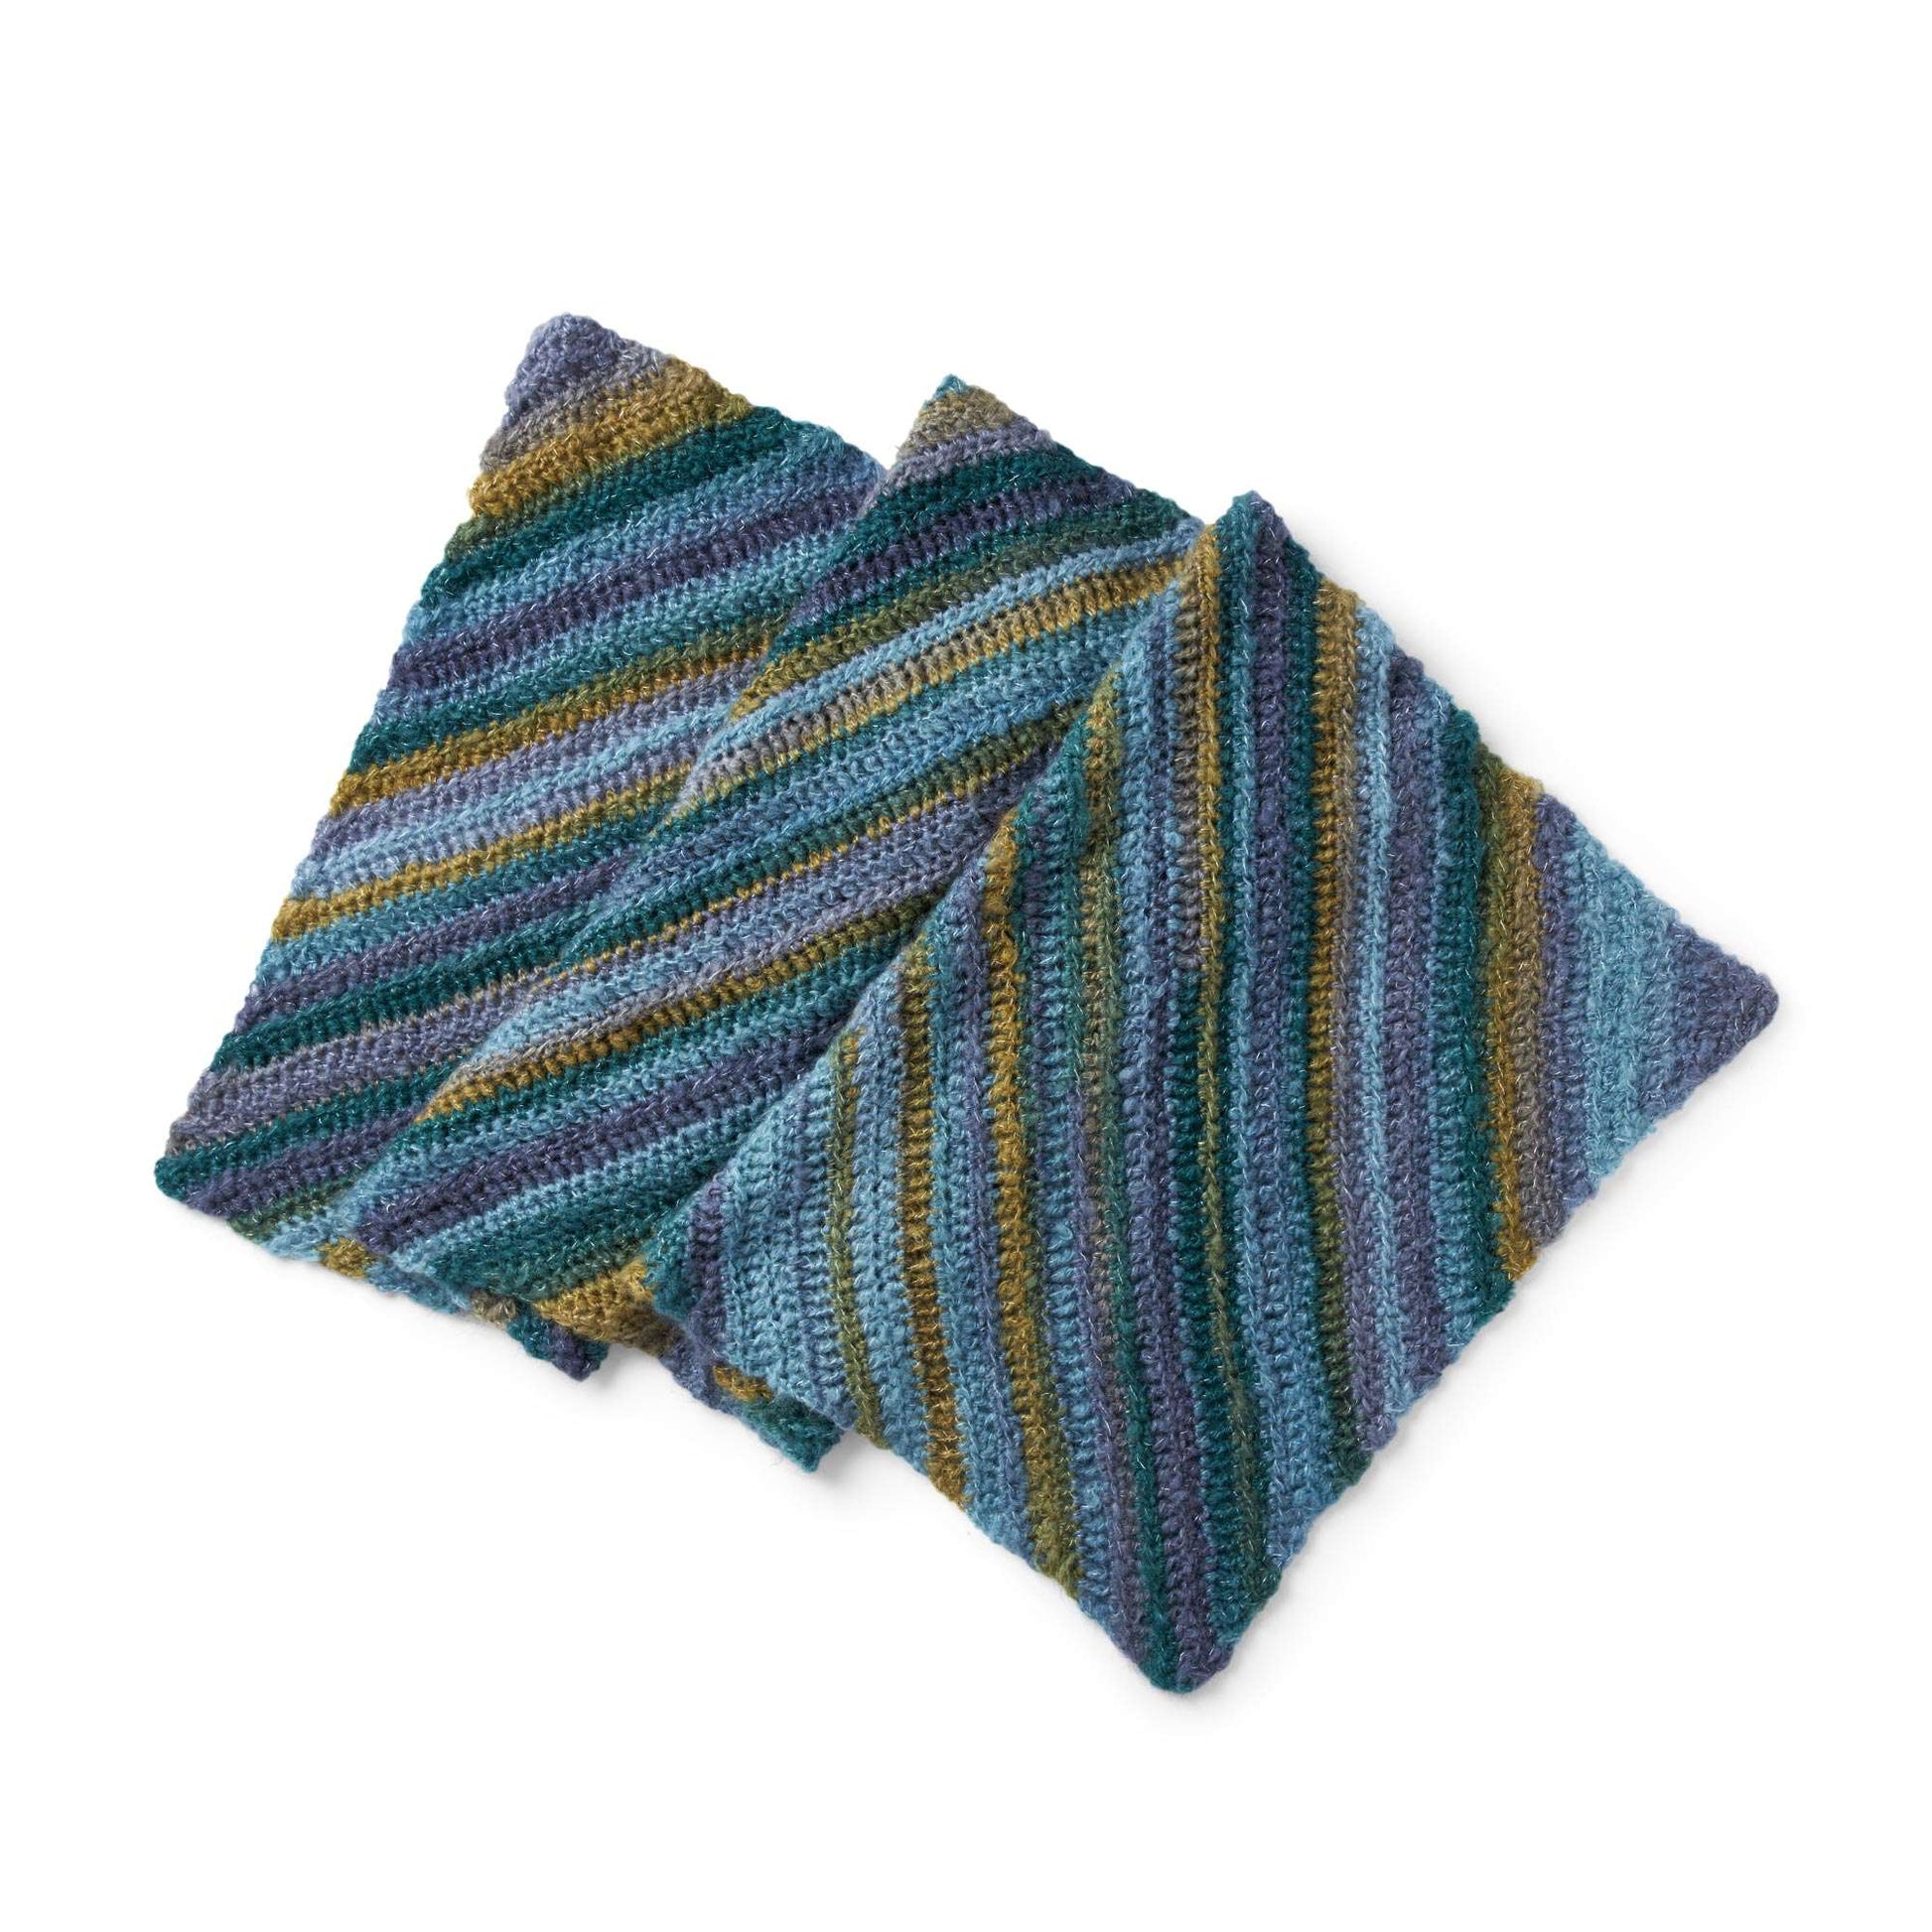 Free Bernat Shifting Colors Crochet Shawl Pattern